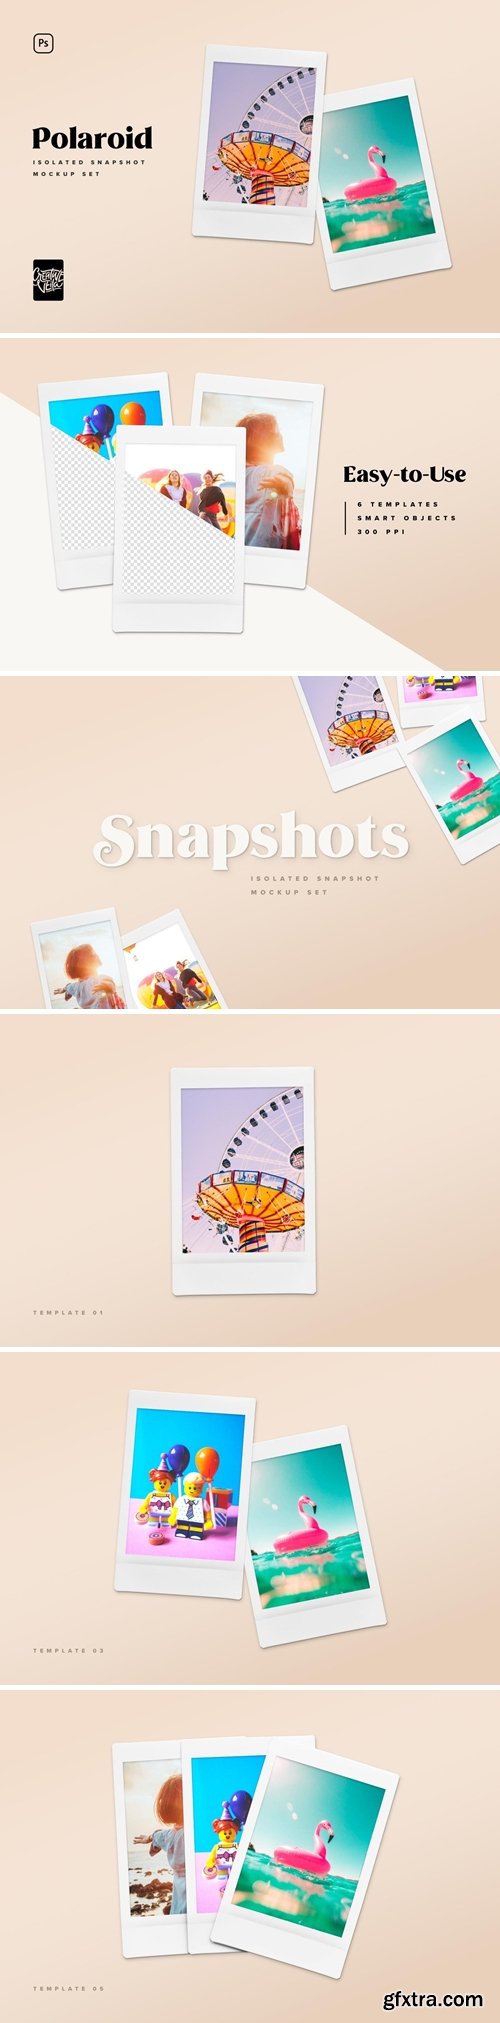 CreativeMarket - Polaroid Snapshot Picture Mock-ups 5029214